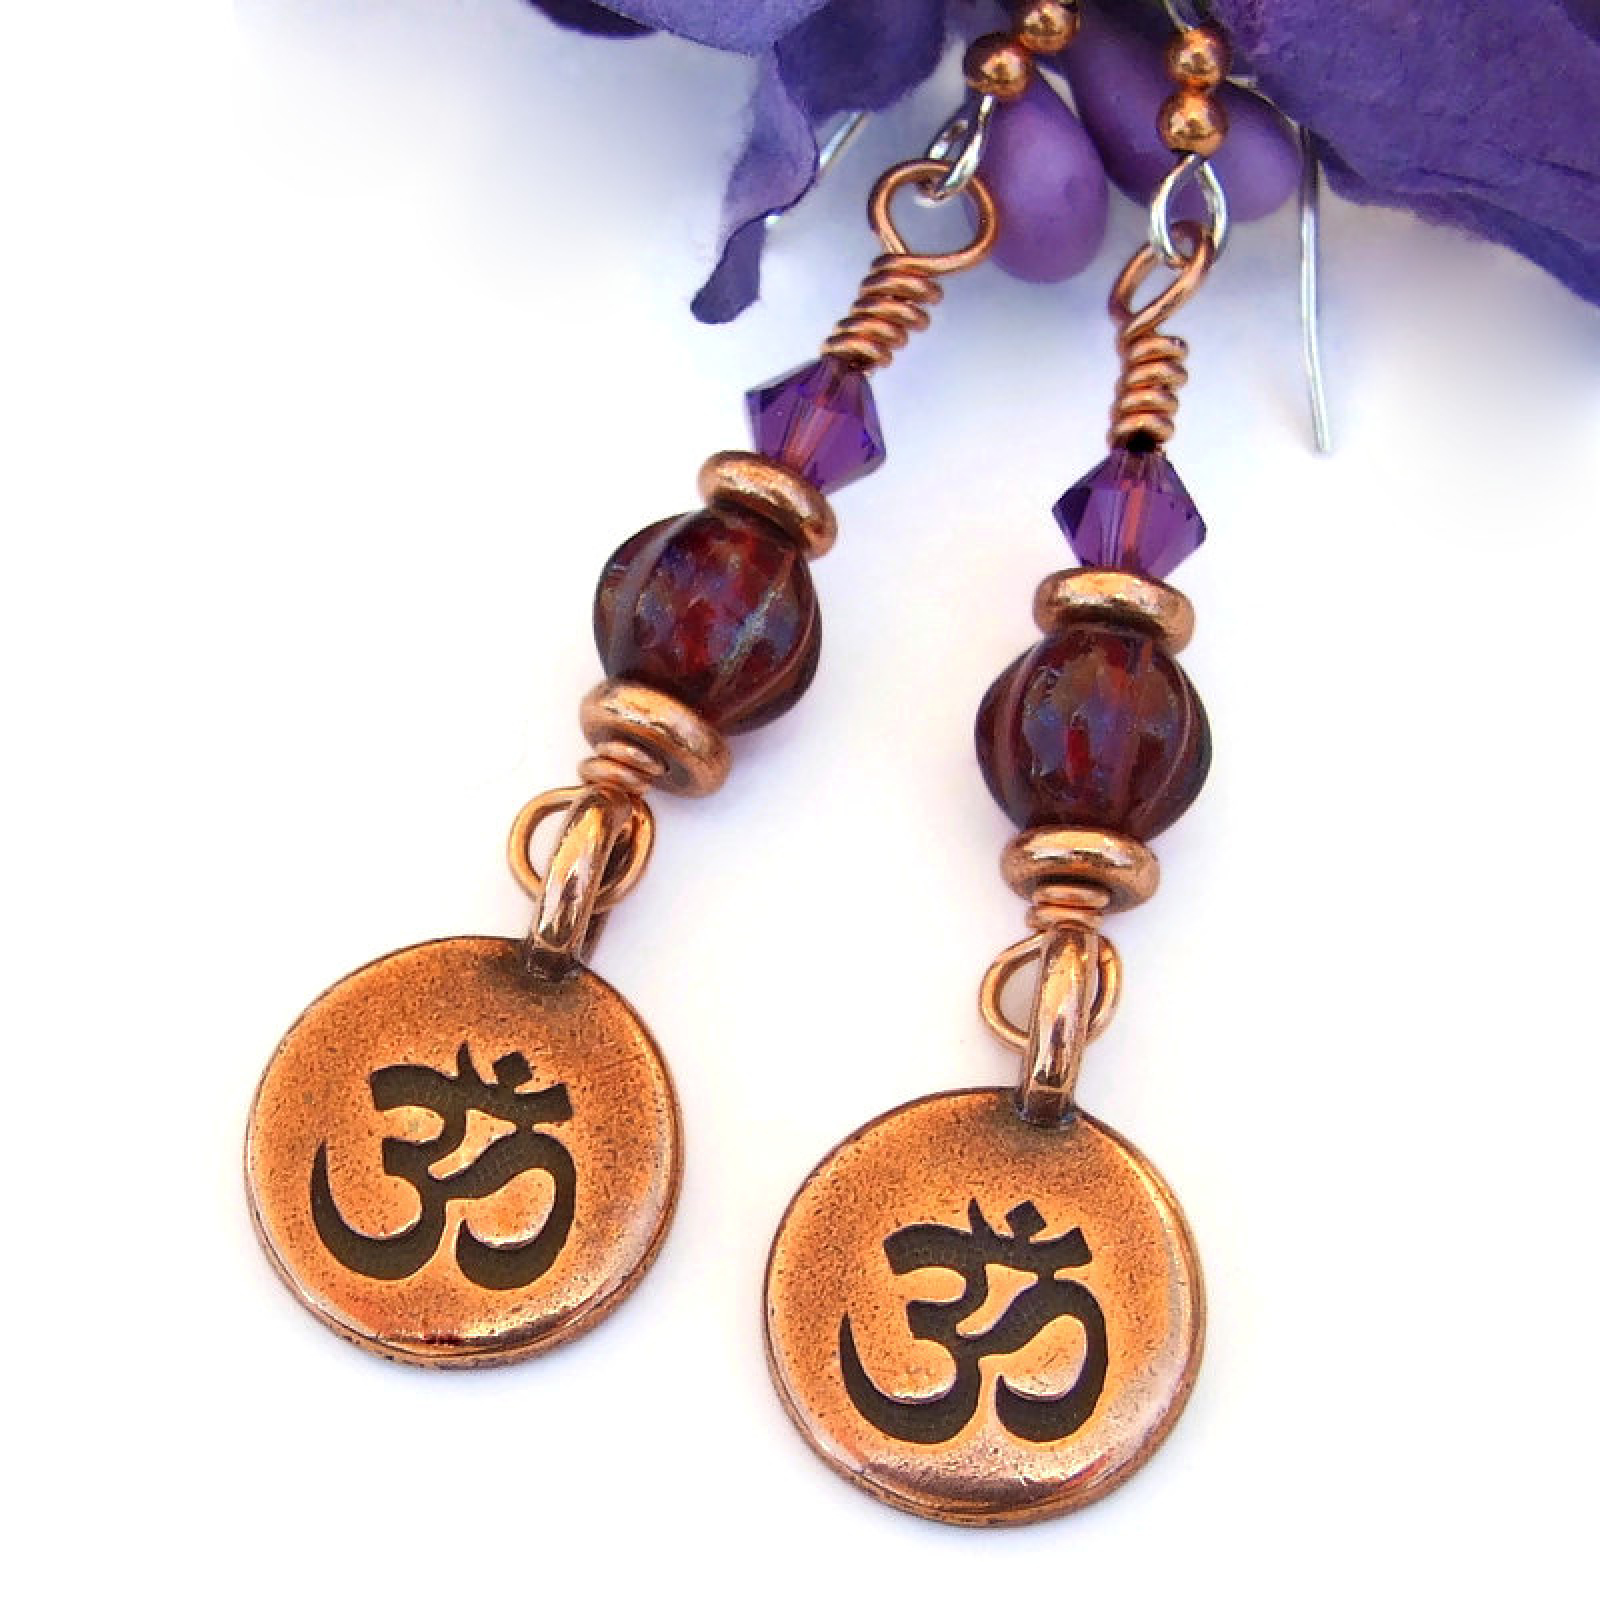 Silver Handmade Om Ohm Disc Yoga Meditation Necklace Pendant 